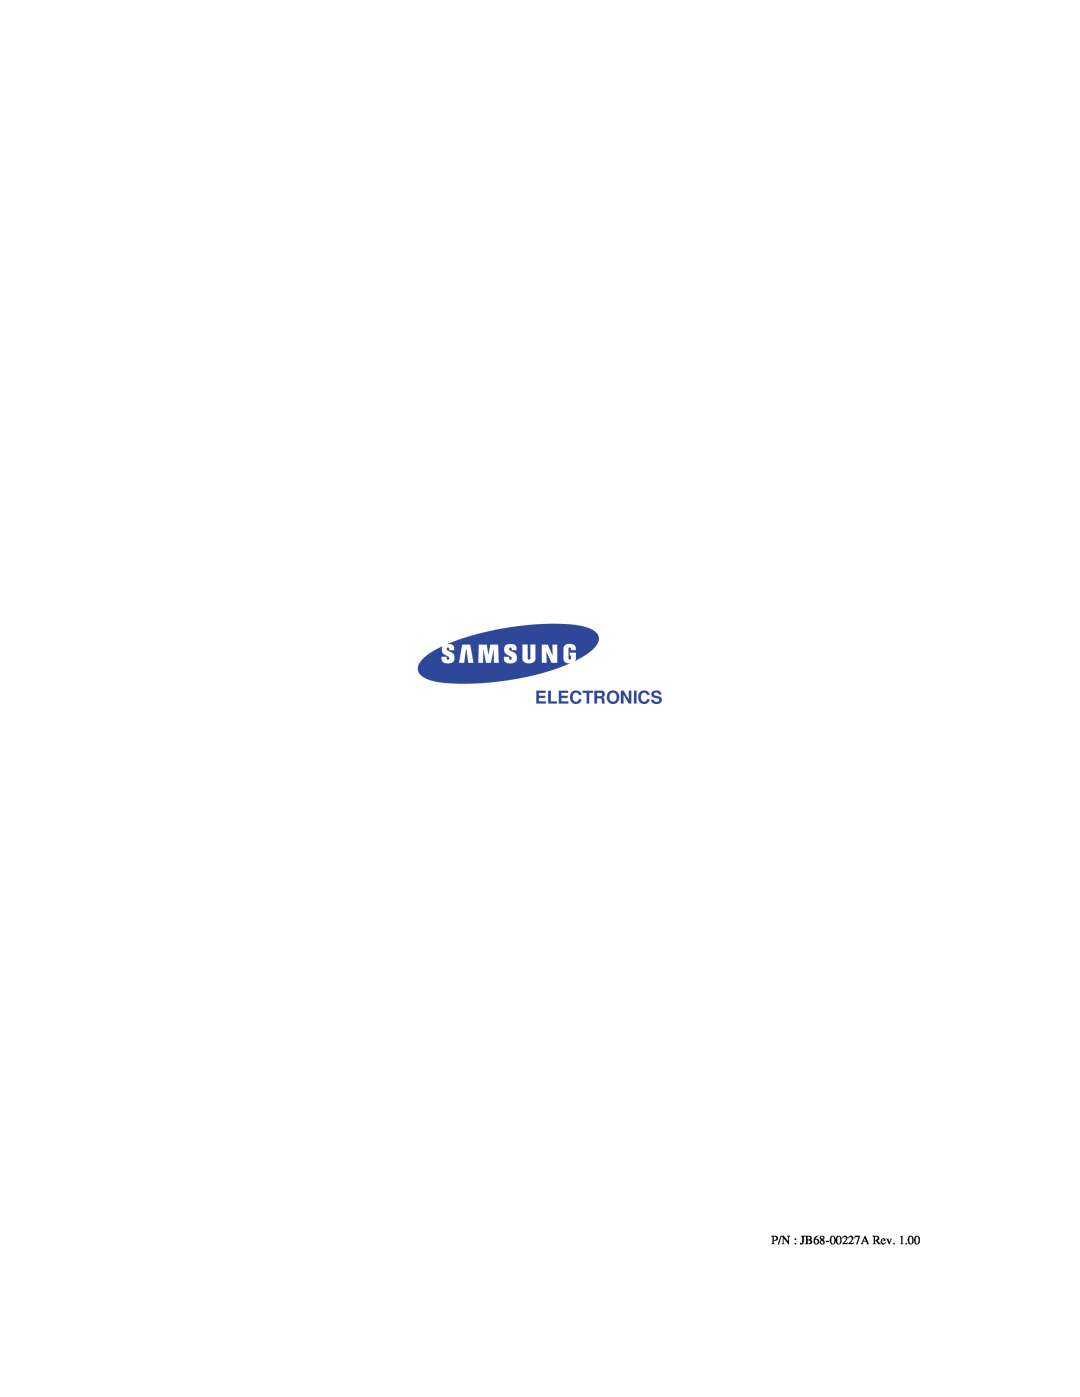 Samsung SF-3100 manual Electronics, P/N JB68-00227A Rev 